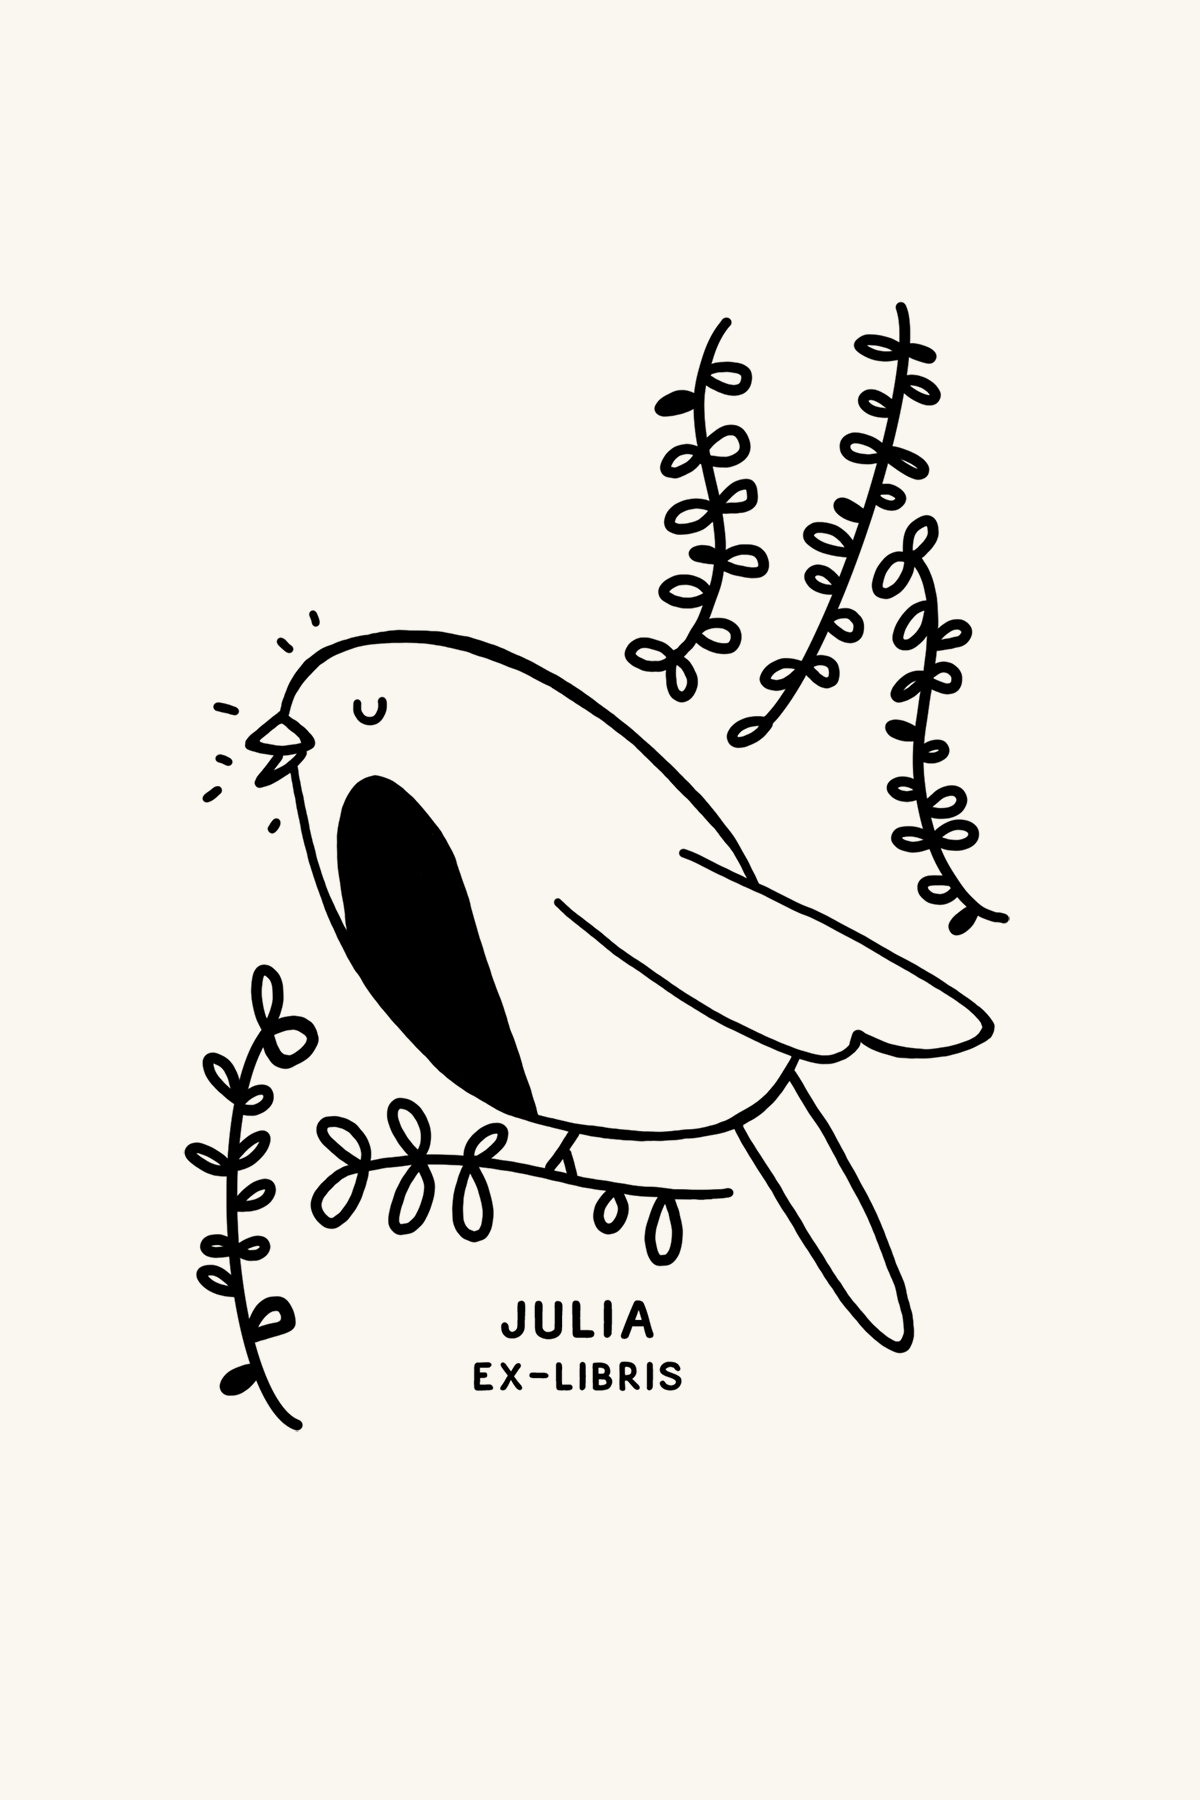 Dibujo de un pájaro petirrojo cantando